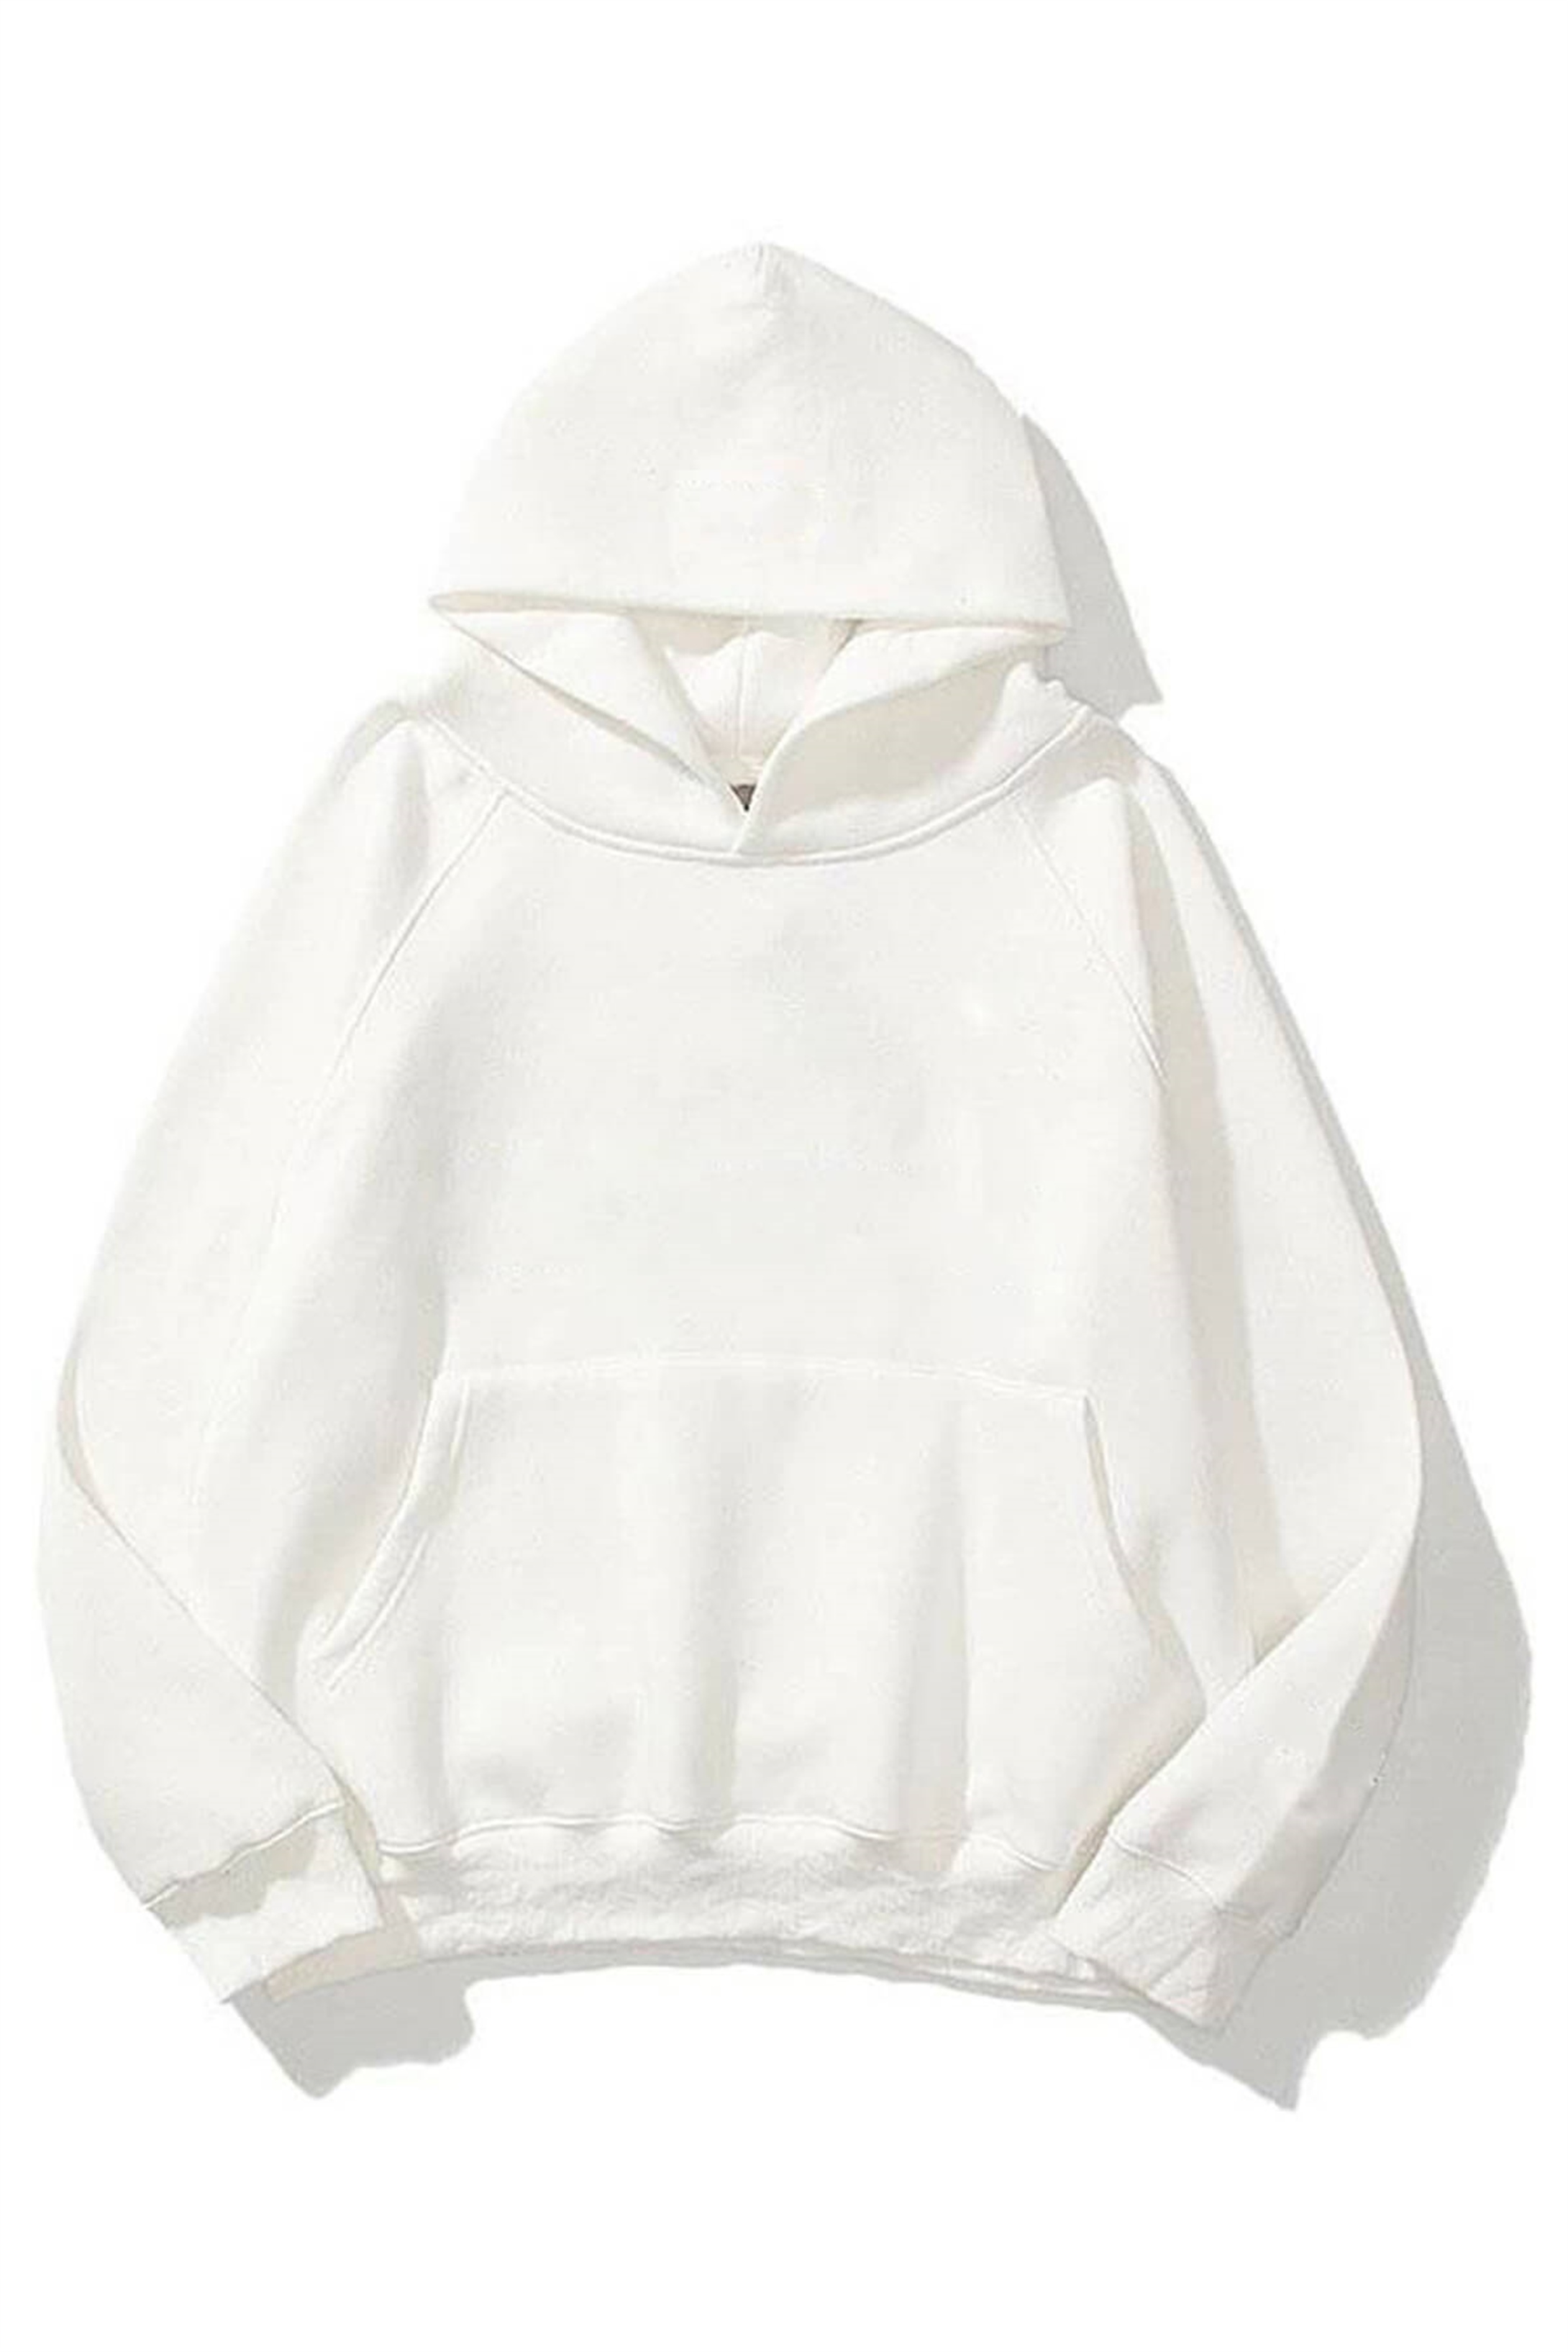 Trendiz Unisex Beyaz Basic Sweatshirt Hoodie - Trendiz